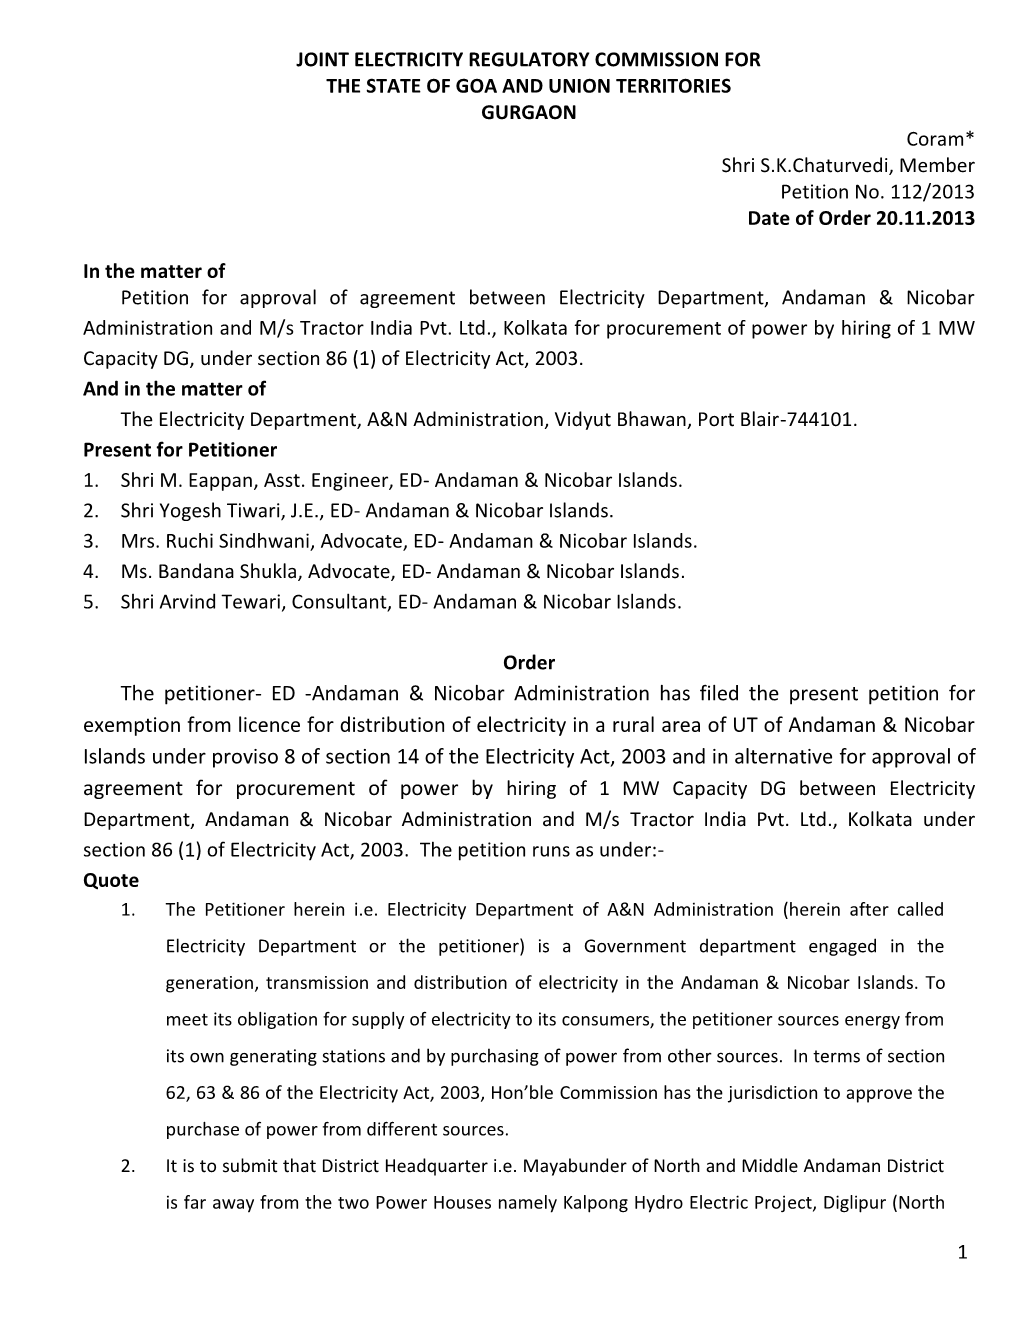 ED -Andaman & Nicobar Administration Has Filed the Present